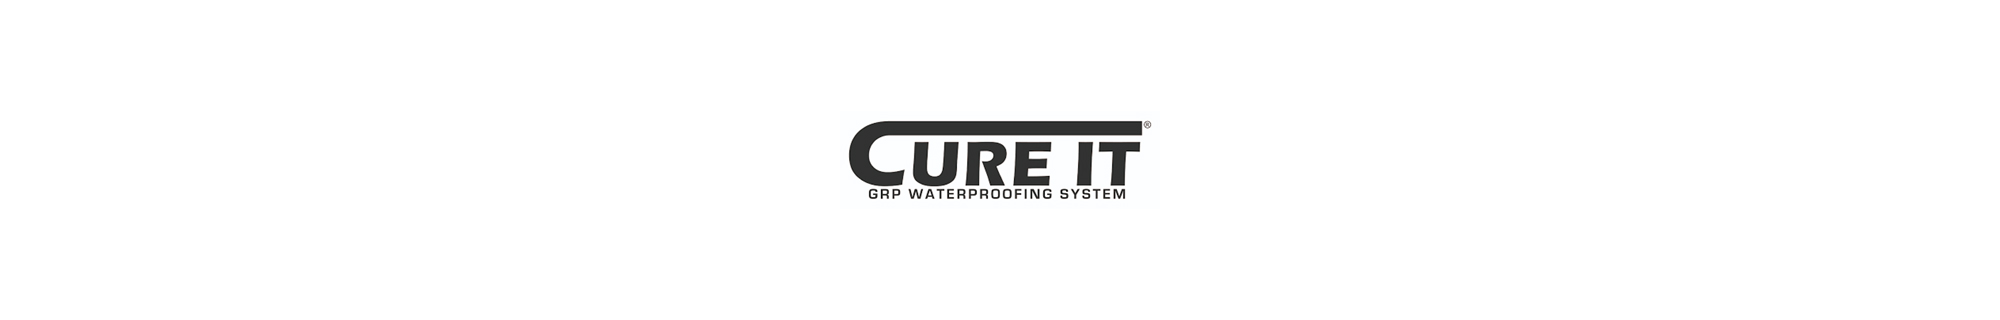 Cure it grp roofing, waterproof, roof